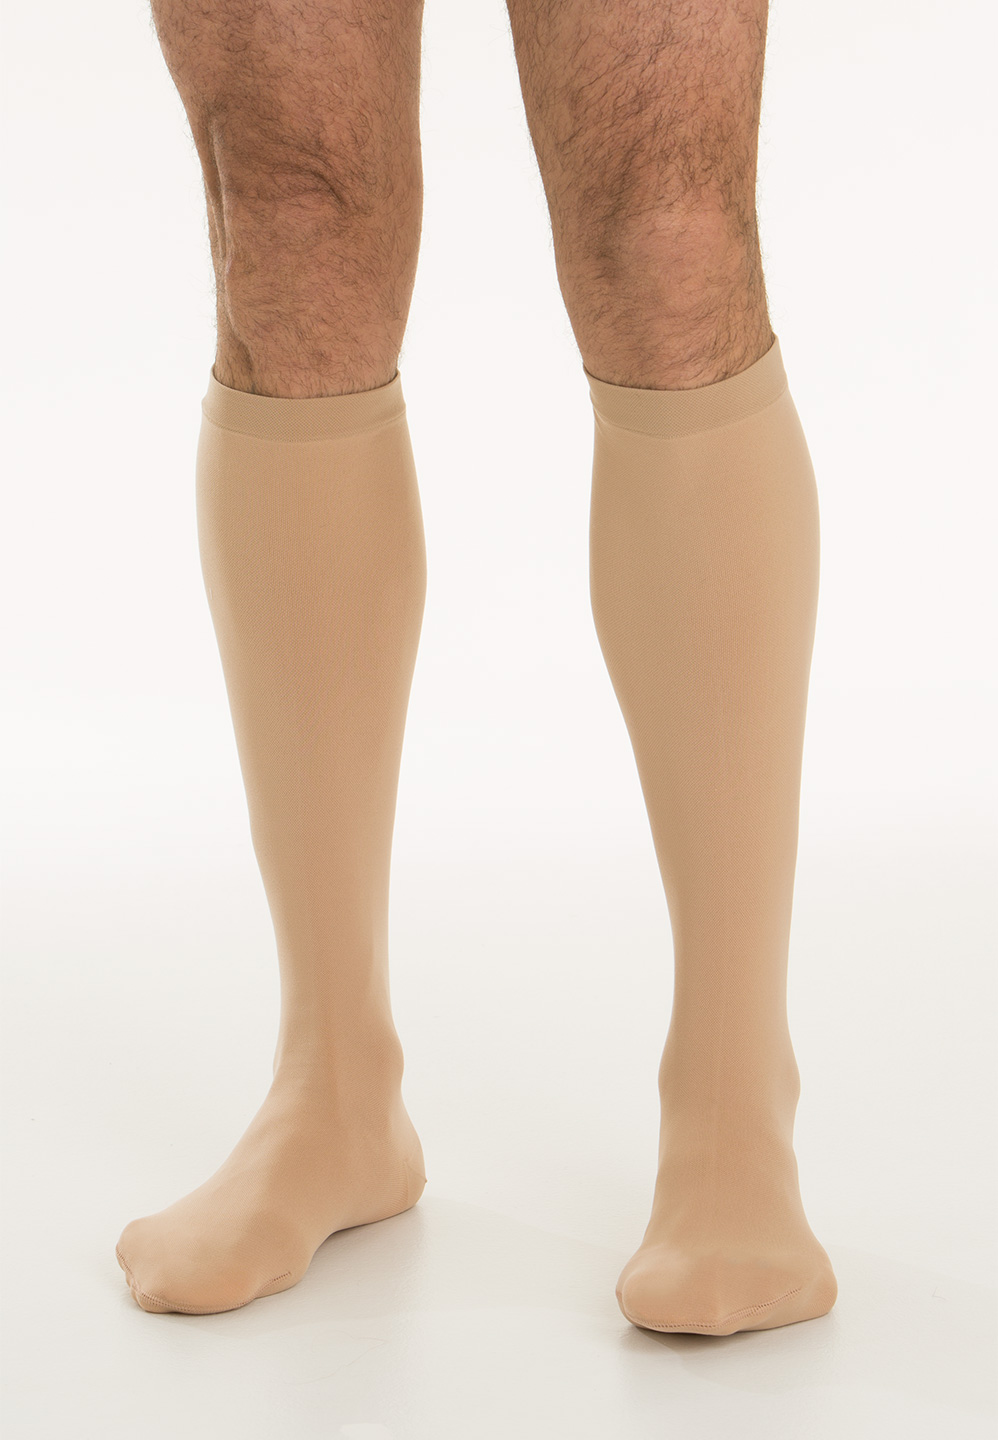 Varicose Vein Stockings Ad Class 3 (Knee Length) - Orthodynamic Limited